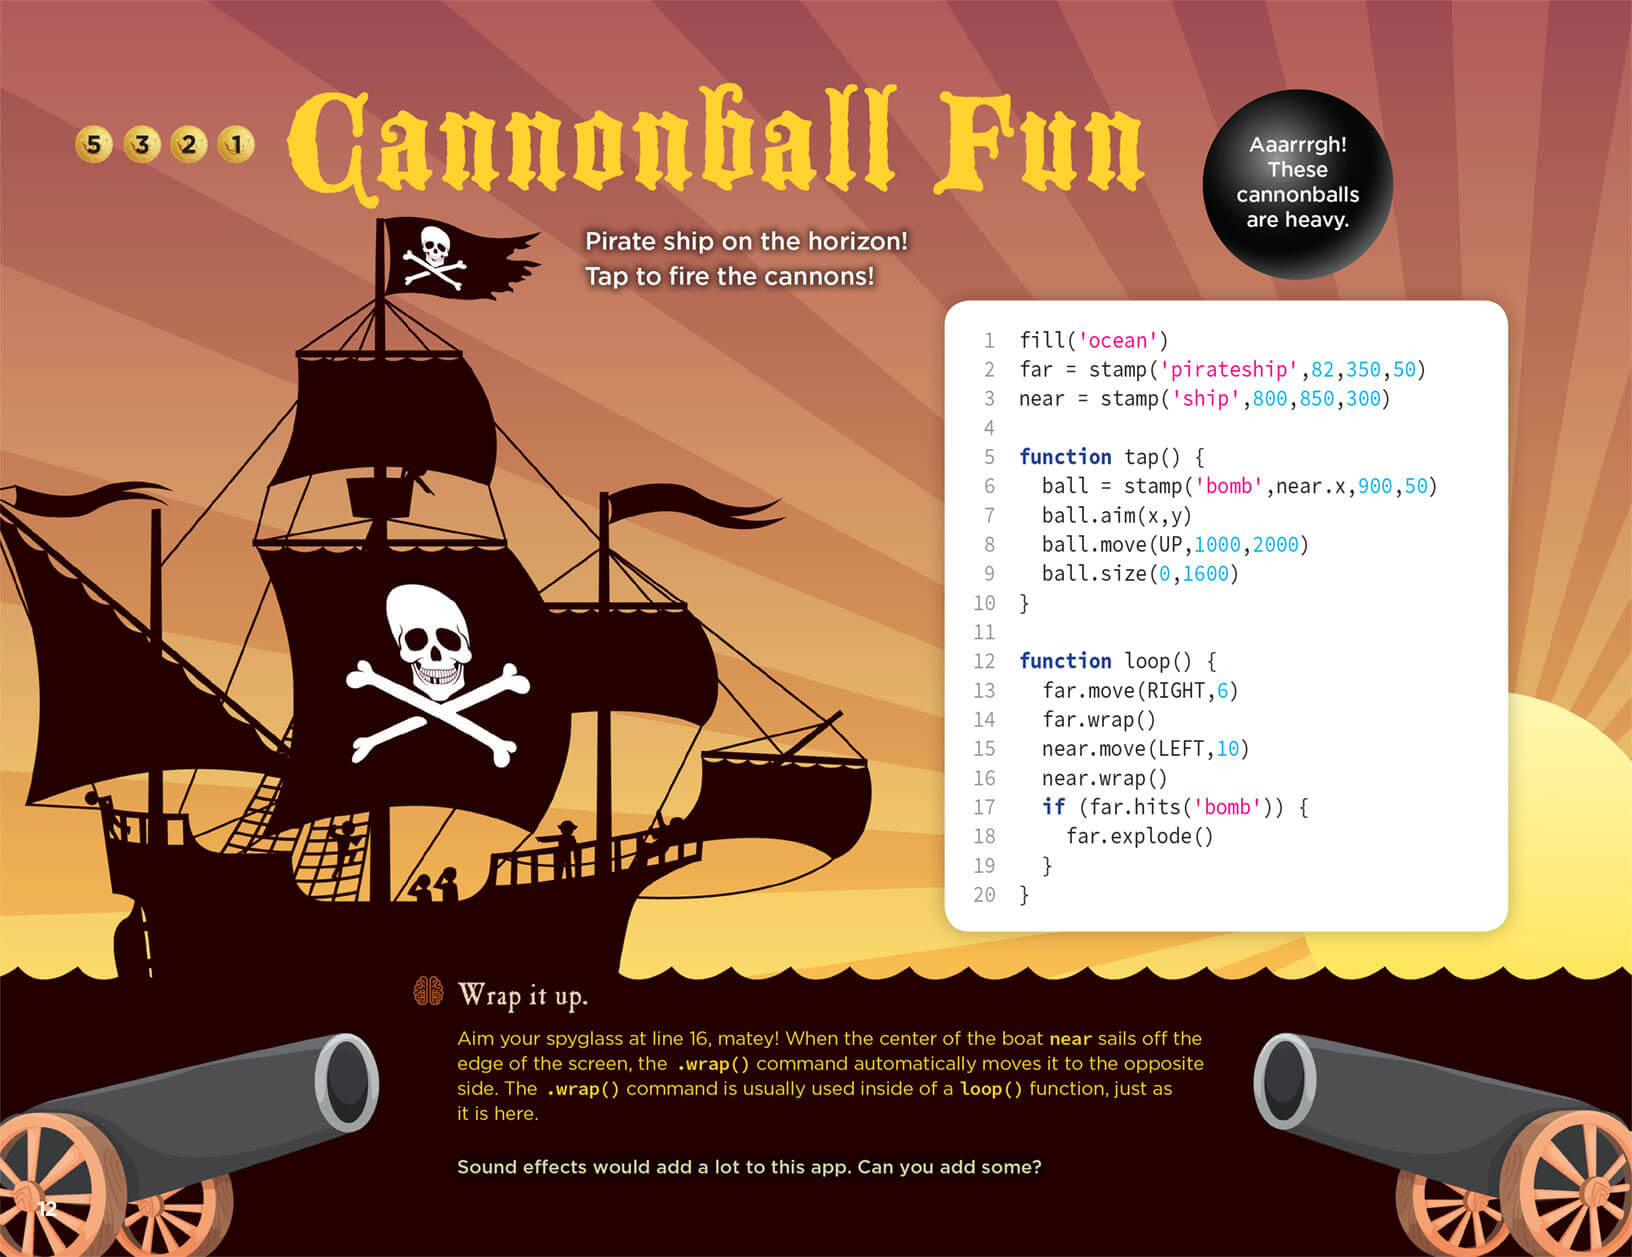 Kids program pirates in the Cannonball Fun app.